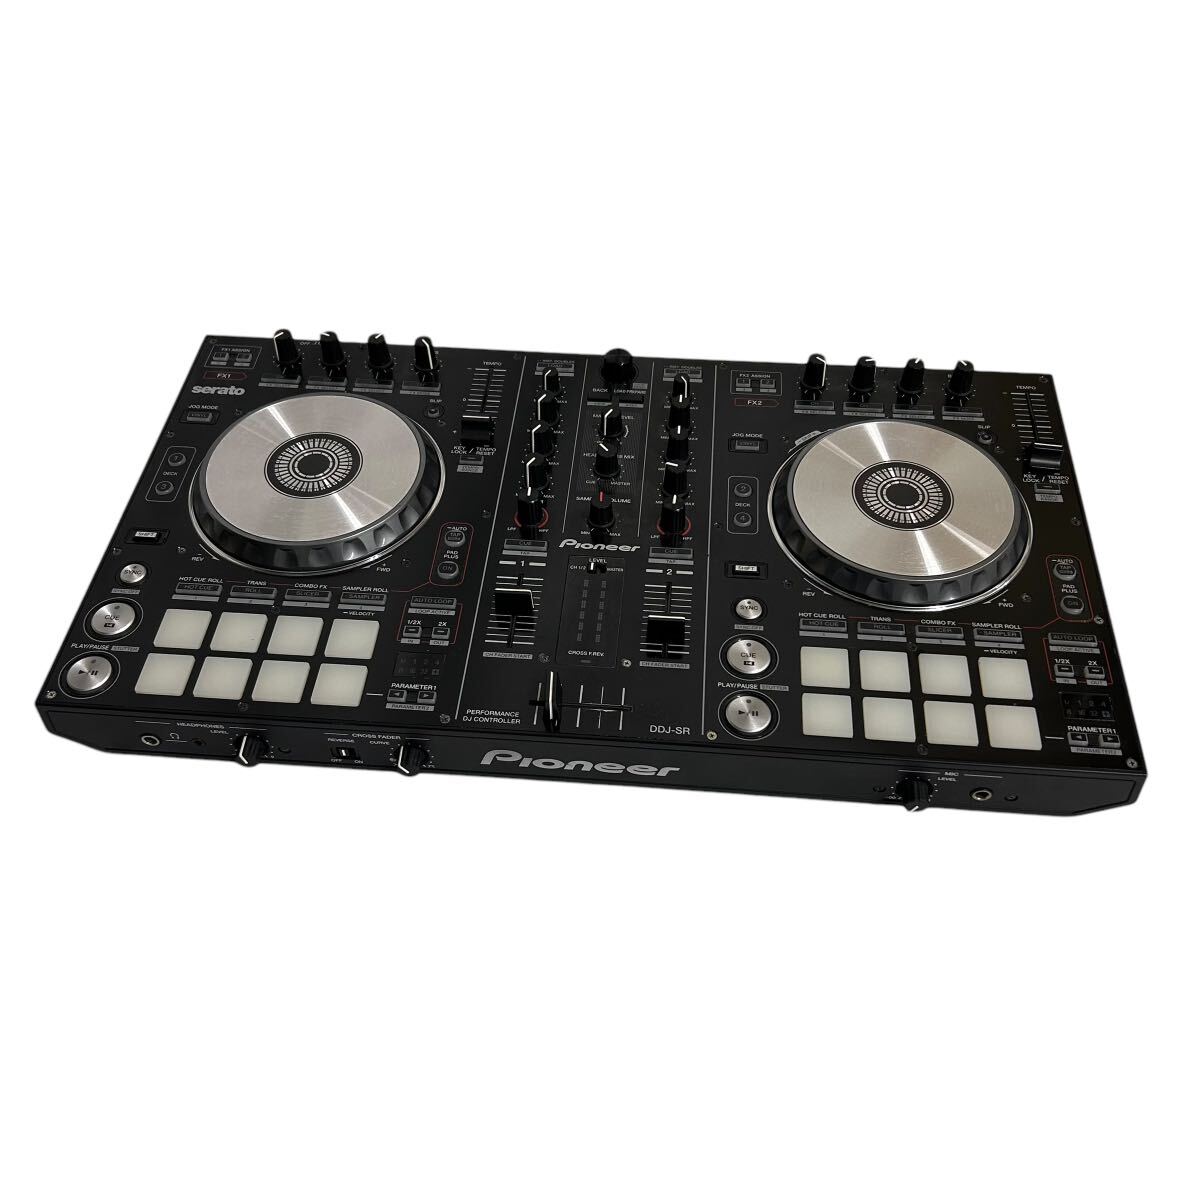 Pioneer DJ controller DDJ-SR Pioneer adaptor attaching case attaching Performance deck saver black DJ equipment 